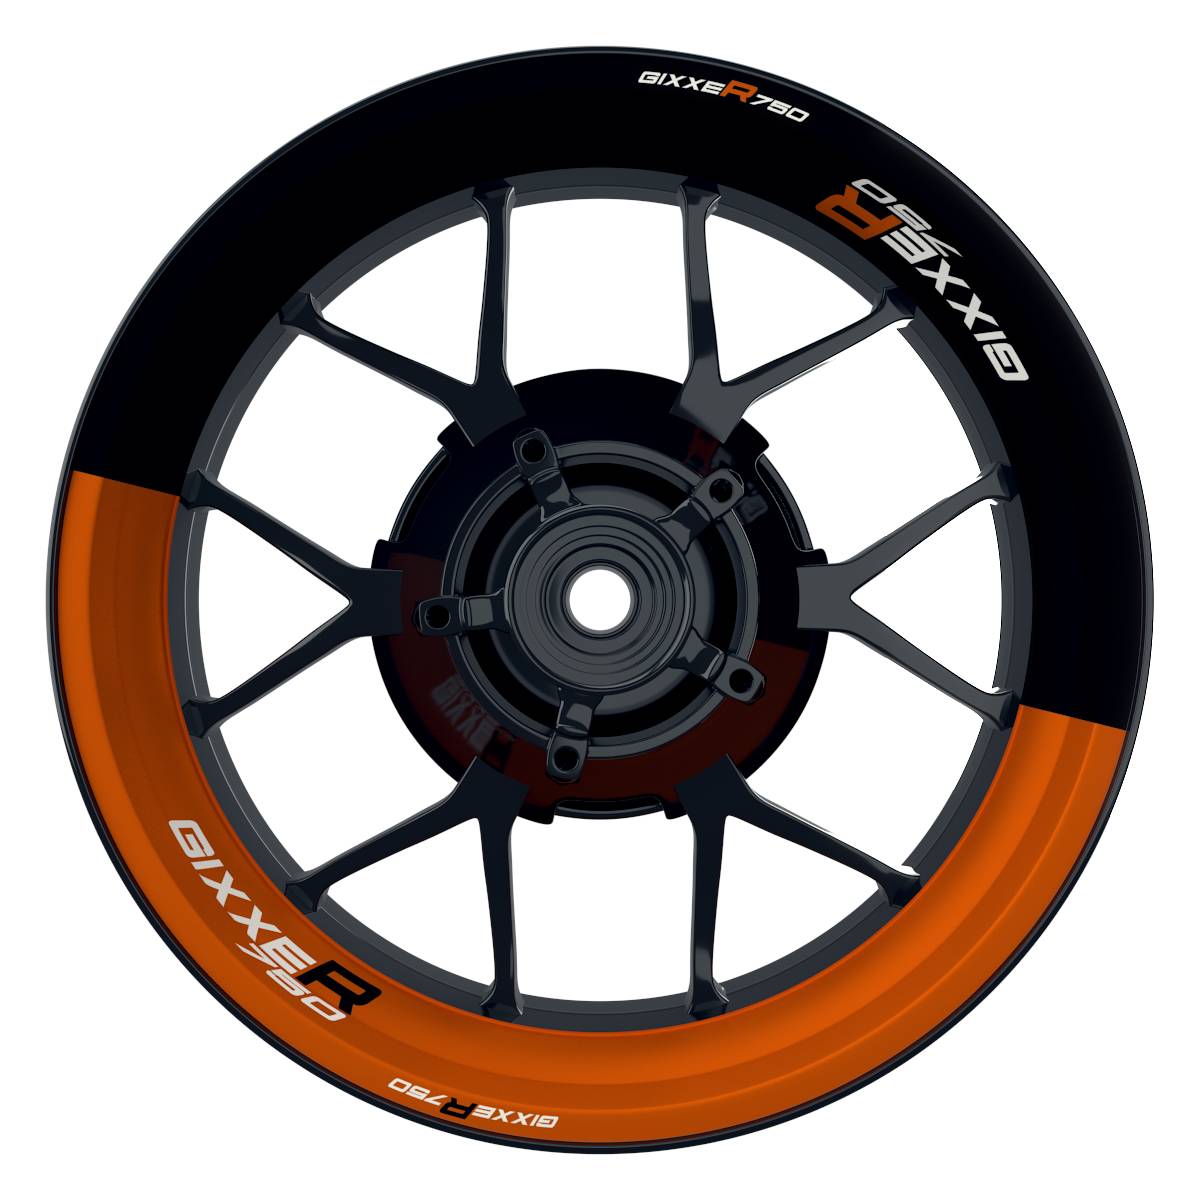 GIXXER750 Halb halb schwarz orange Wheelsticker Felgenaufkleber